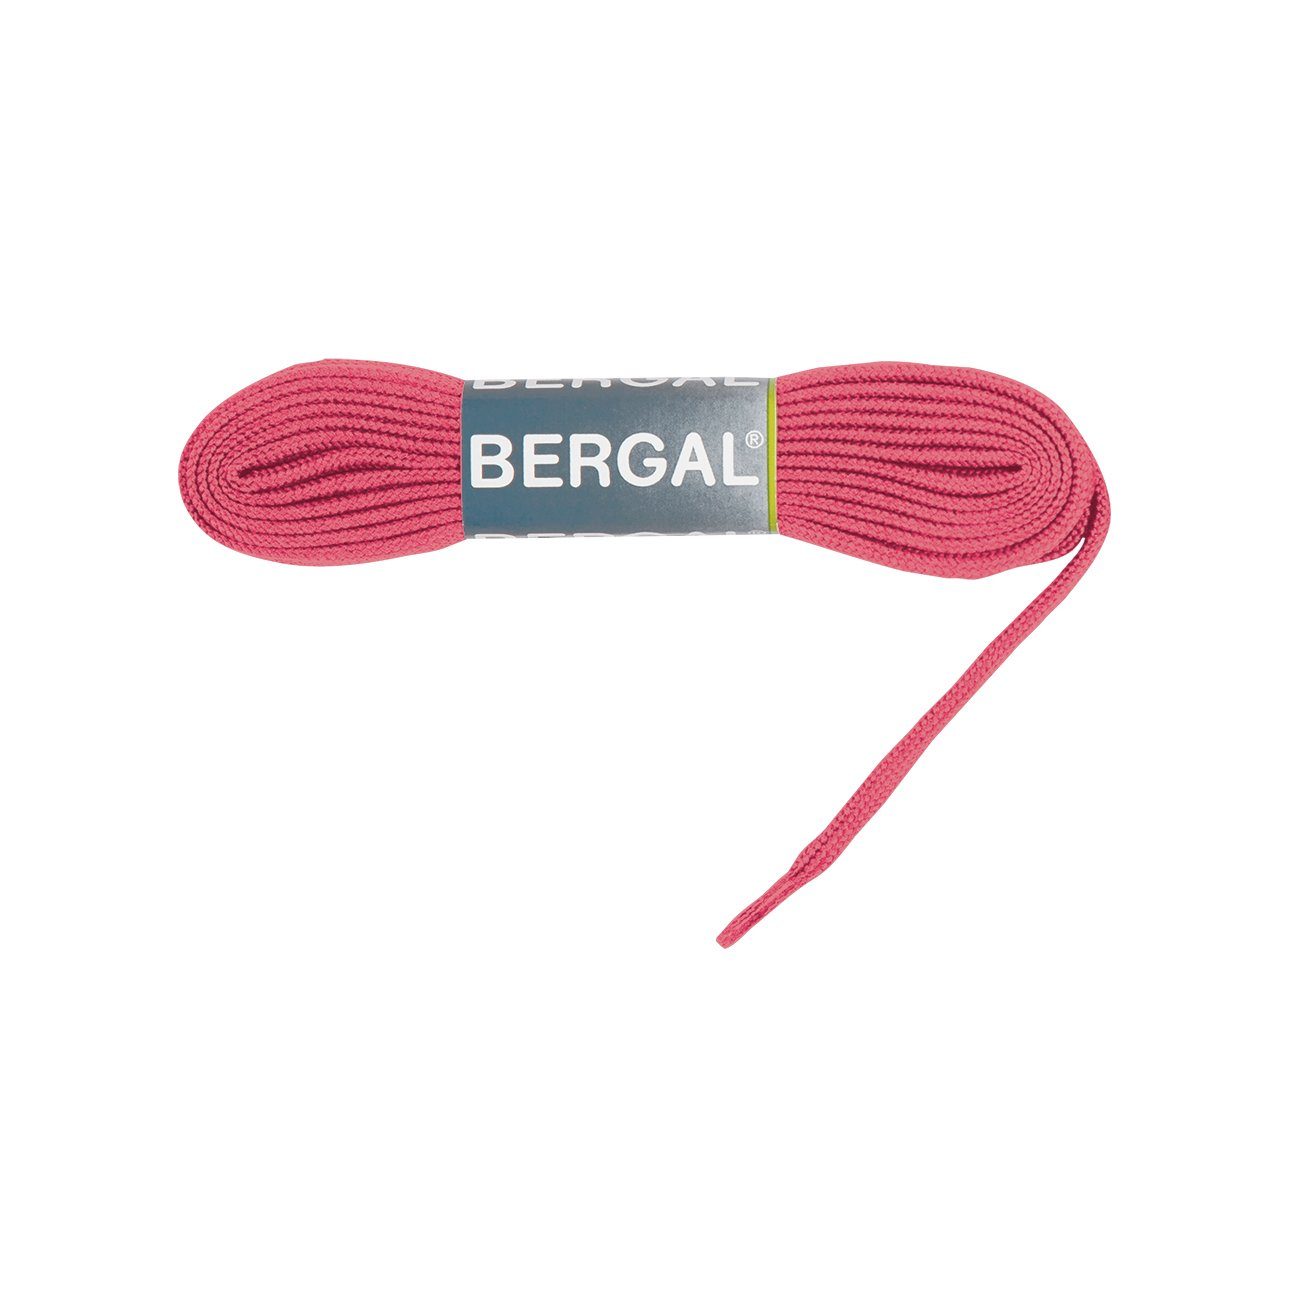 Bergal Schnürsenkel Sneaker Laces - Flach 10 Breit - Neonpink mm